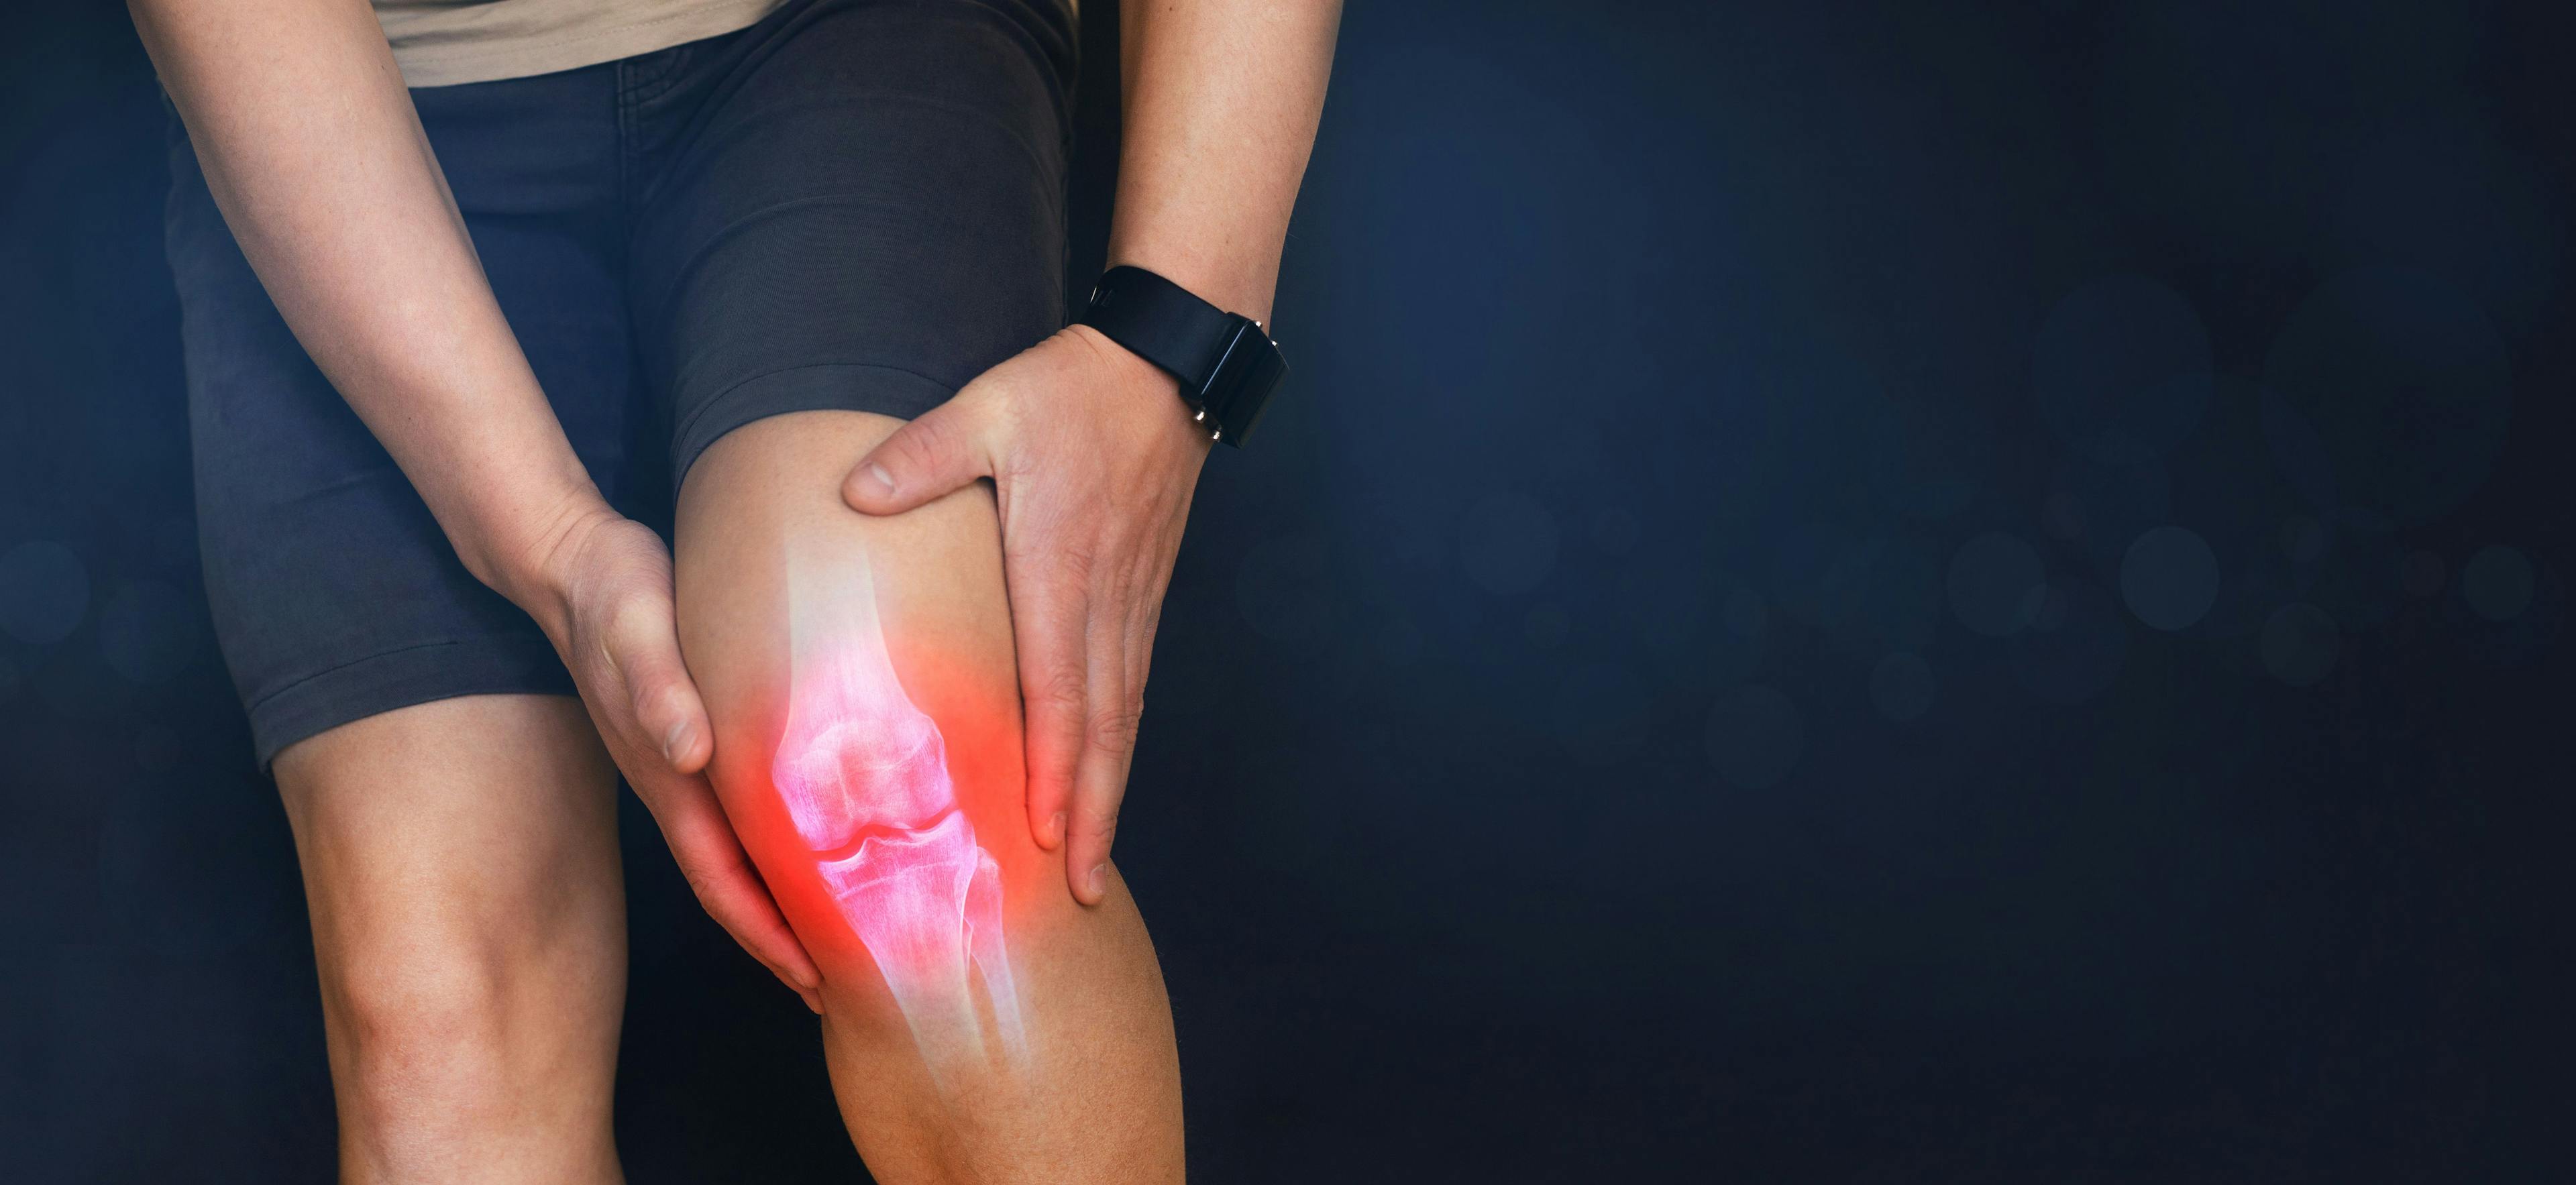 Digital bone of human leg. Man suffering from knee pain | Image Credit: © Miha Creative - stock.adobe.com